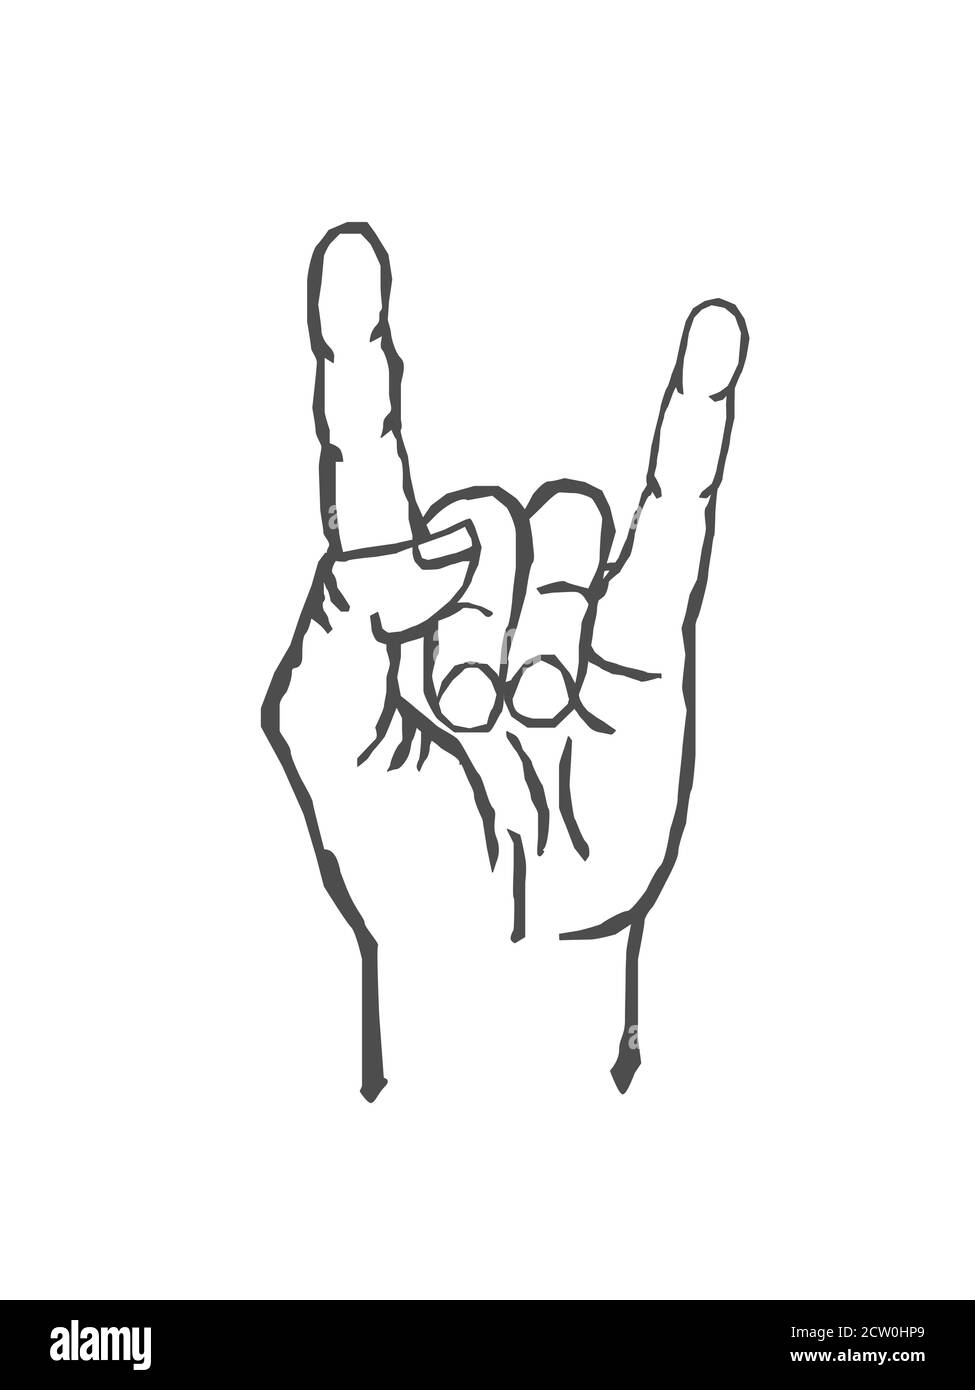 Rock n roll hand sign vector illustration. Sign of horns heavy metal music symbol. Stock Vector